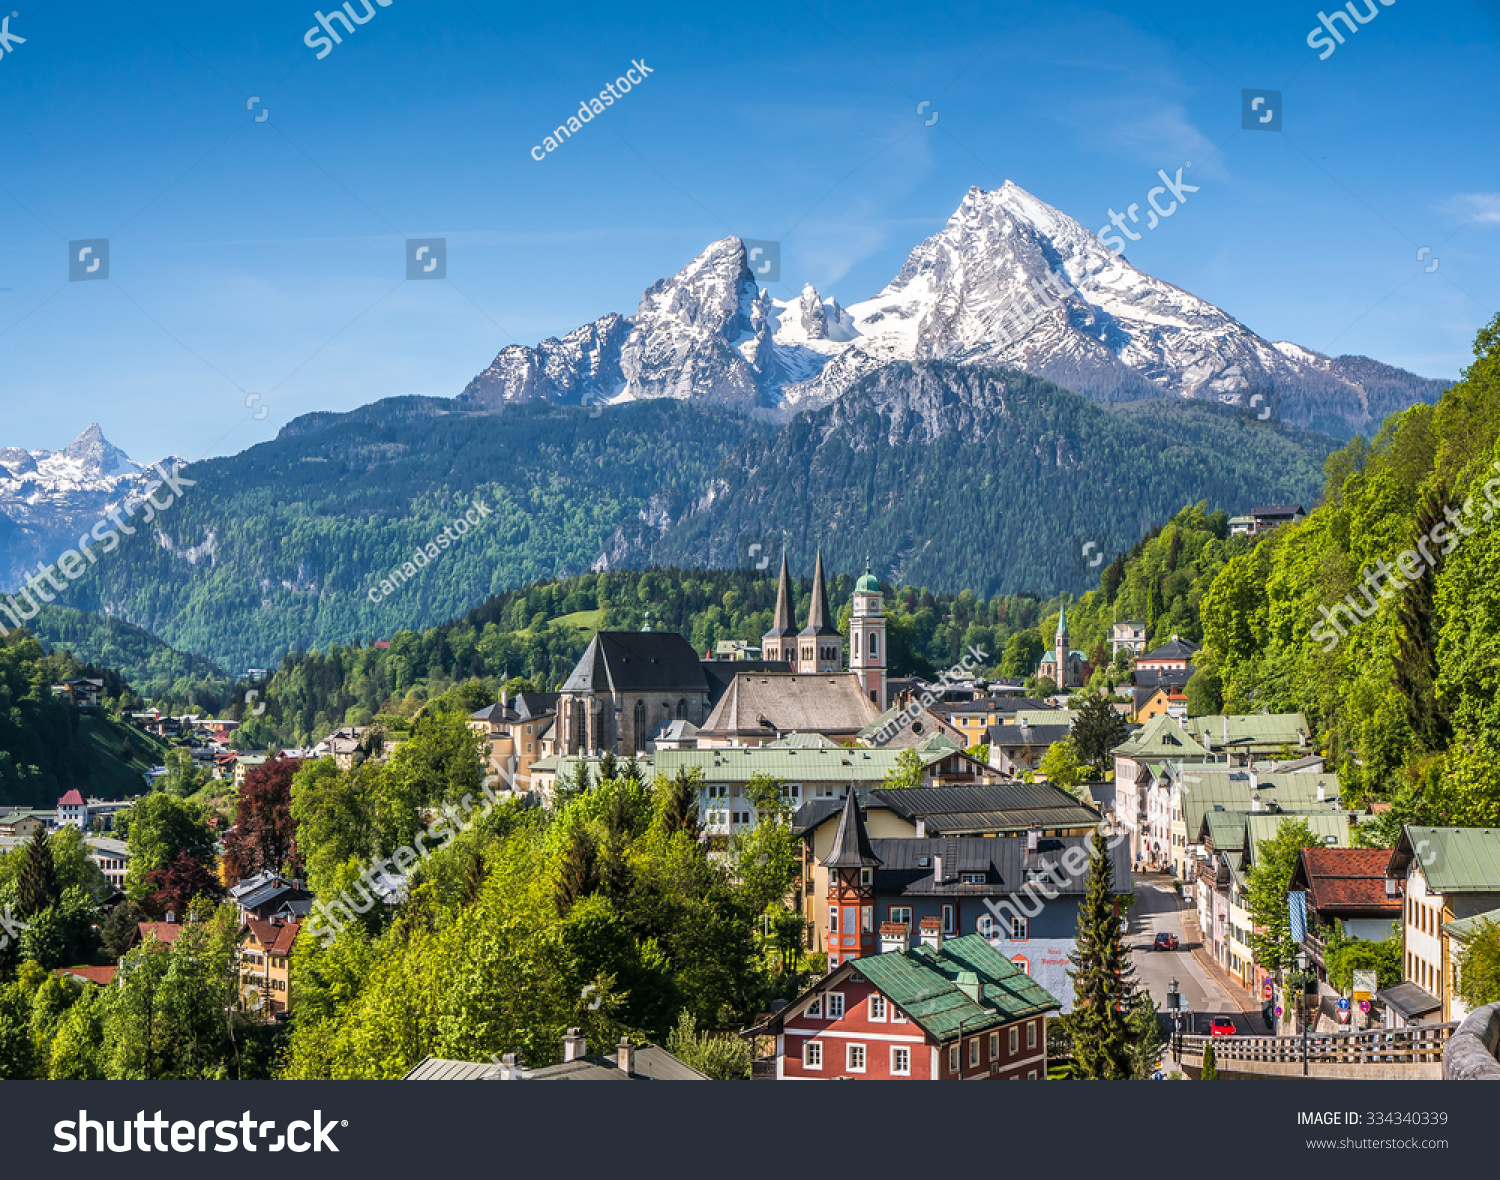 Historic town of Berchtesgaden with snowy Watzmann mountain in spring, Berchtesgadener Land, Upper Bavaria, Germany #334340339